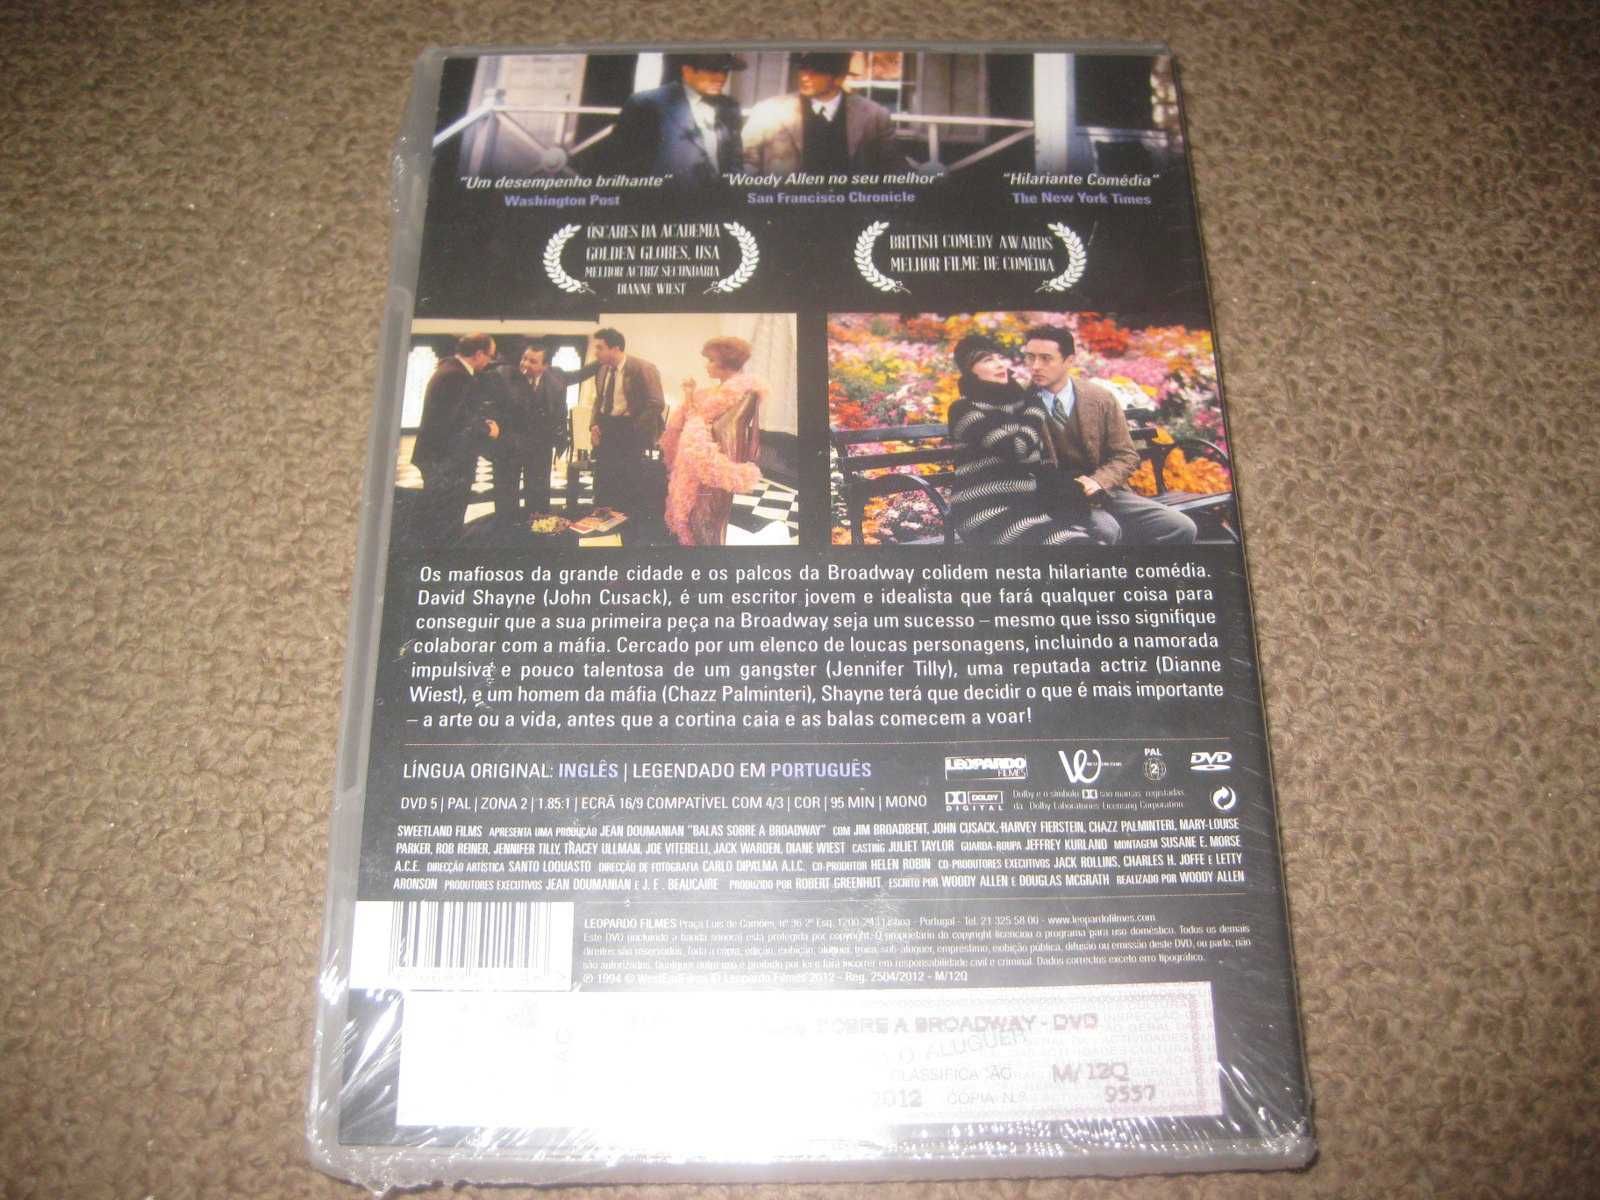 DVD "Balas sobre a Broadway" de Woody Allen/Selado!